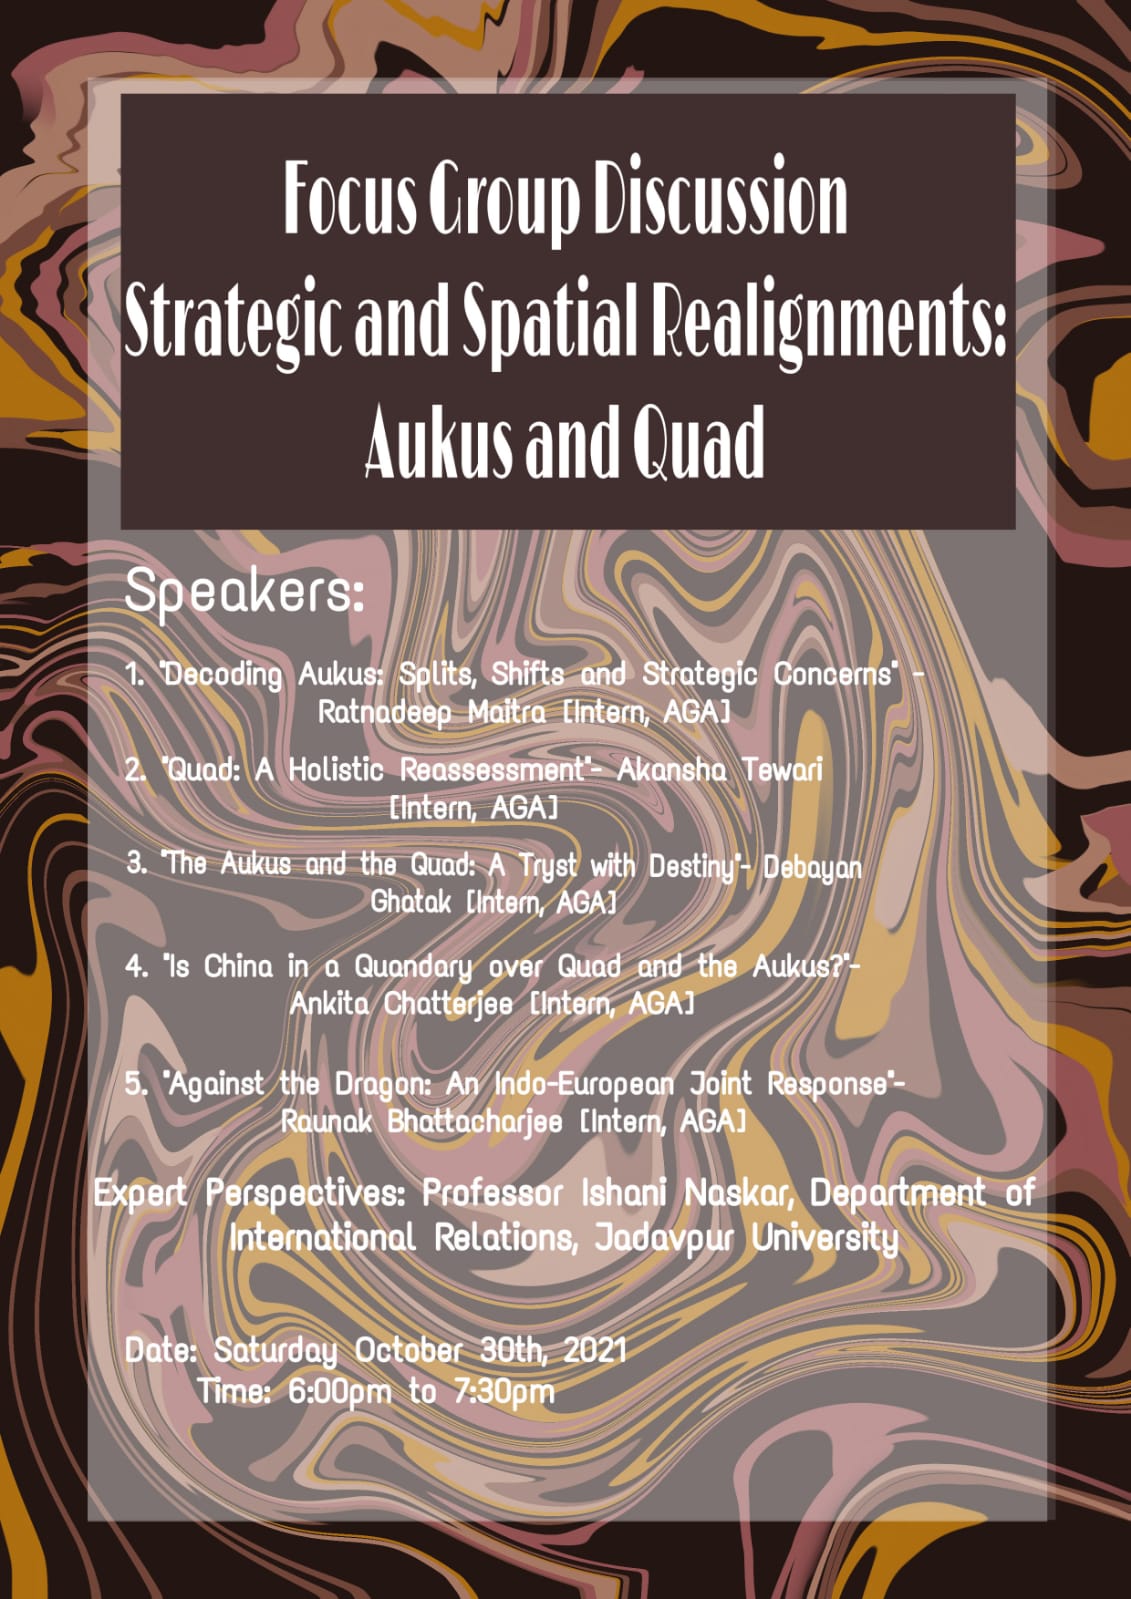 Focus Croup Discussion Strategic and Spatial Eealioments: Aukus and Cuad